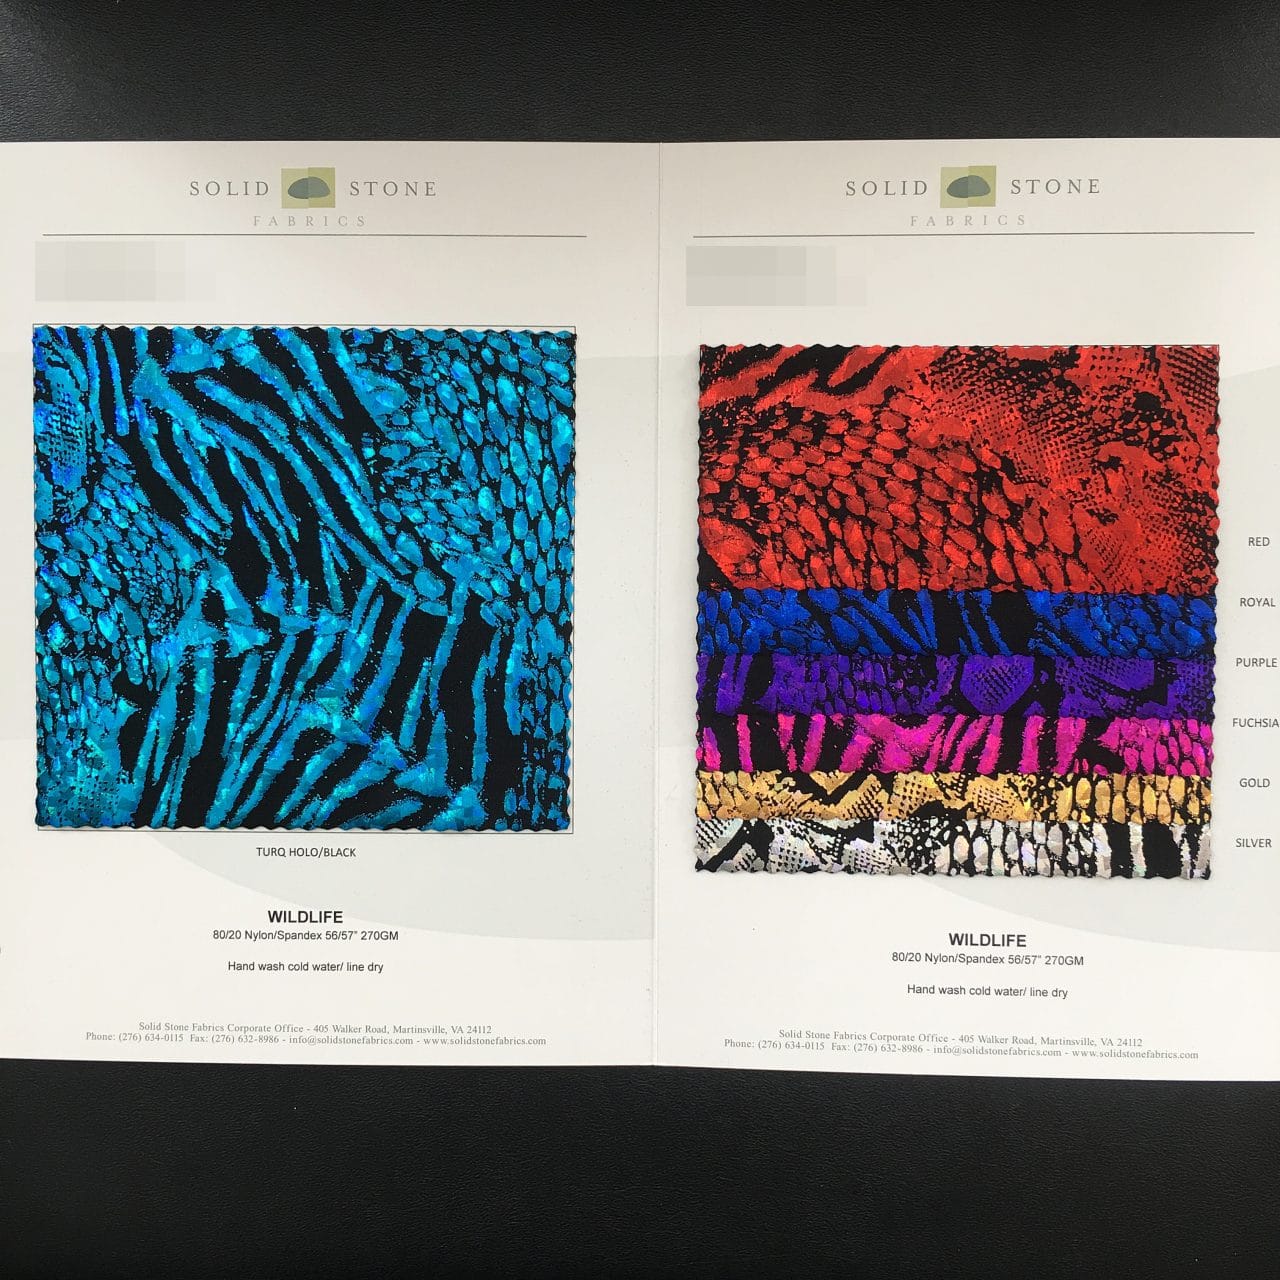 Animal Print Hologram Fabric Swatches - Solid Stone Fabrics, Inc.